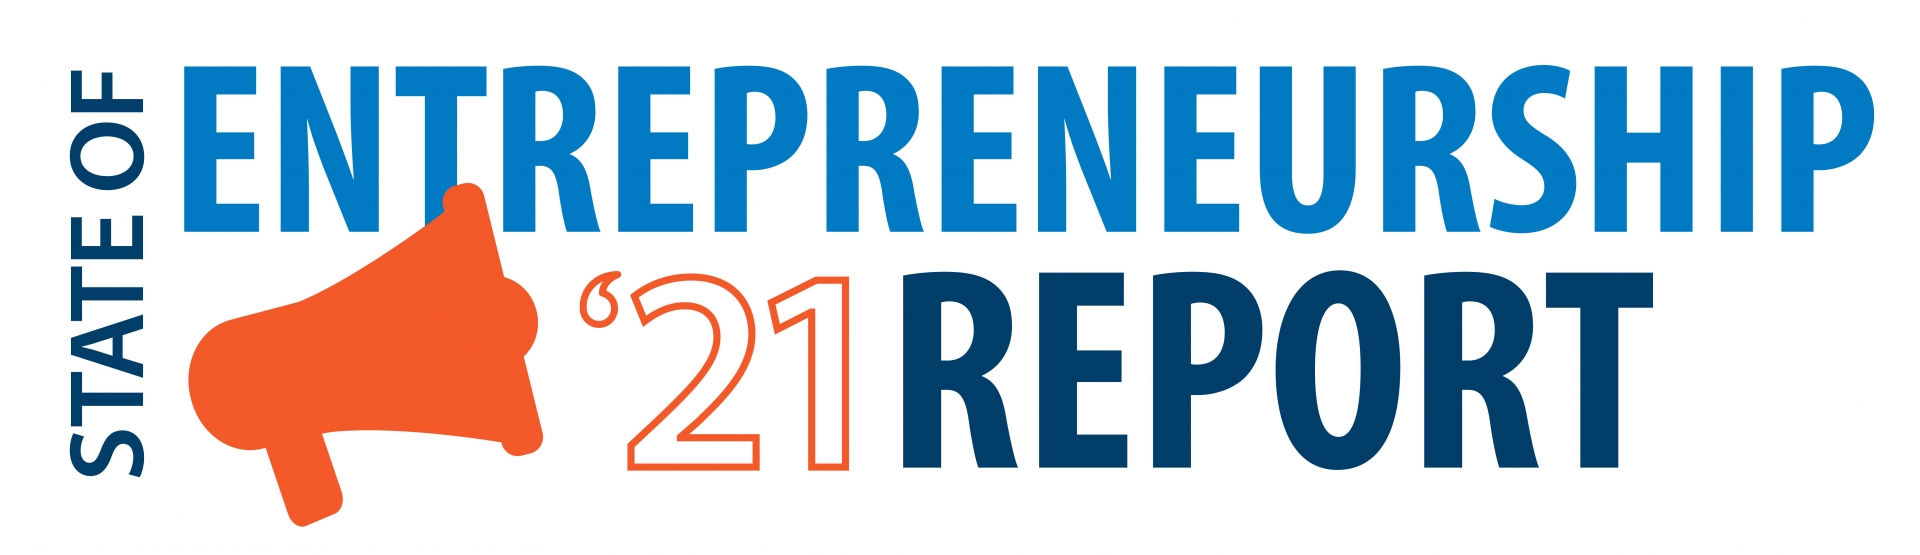 State of Entrepreneuship 2021report